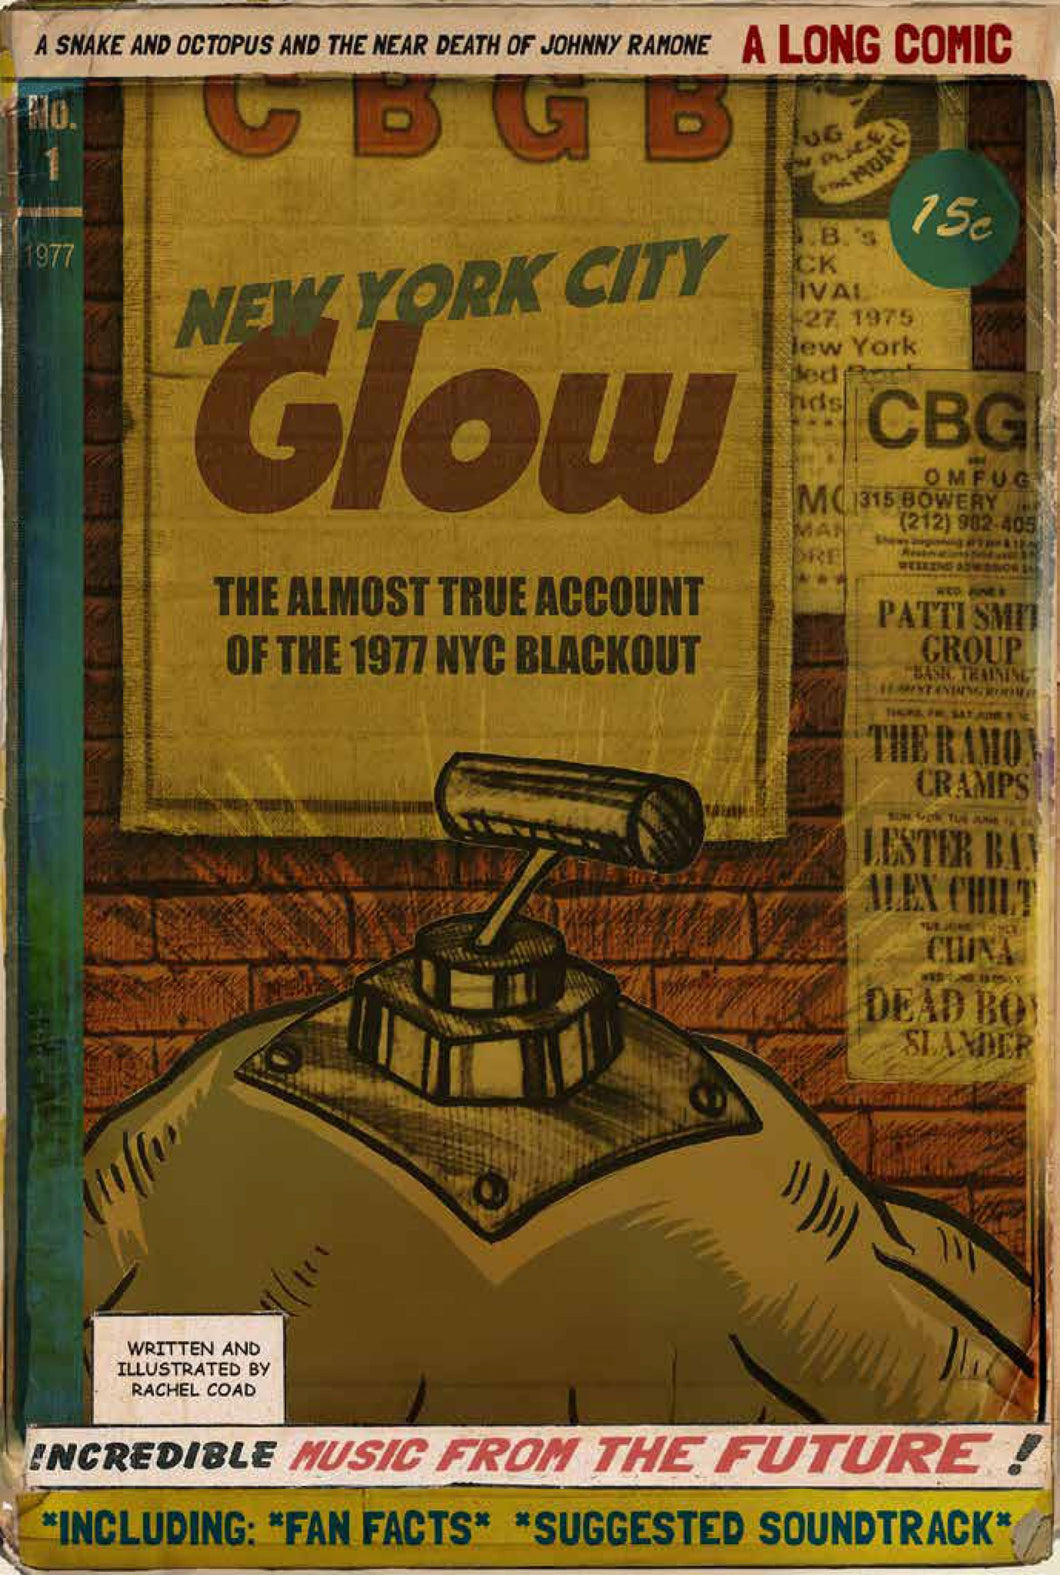 New York City - Glow (Signed by Artist Rachel Coad)